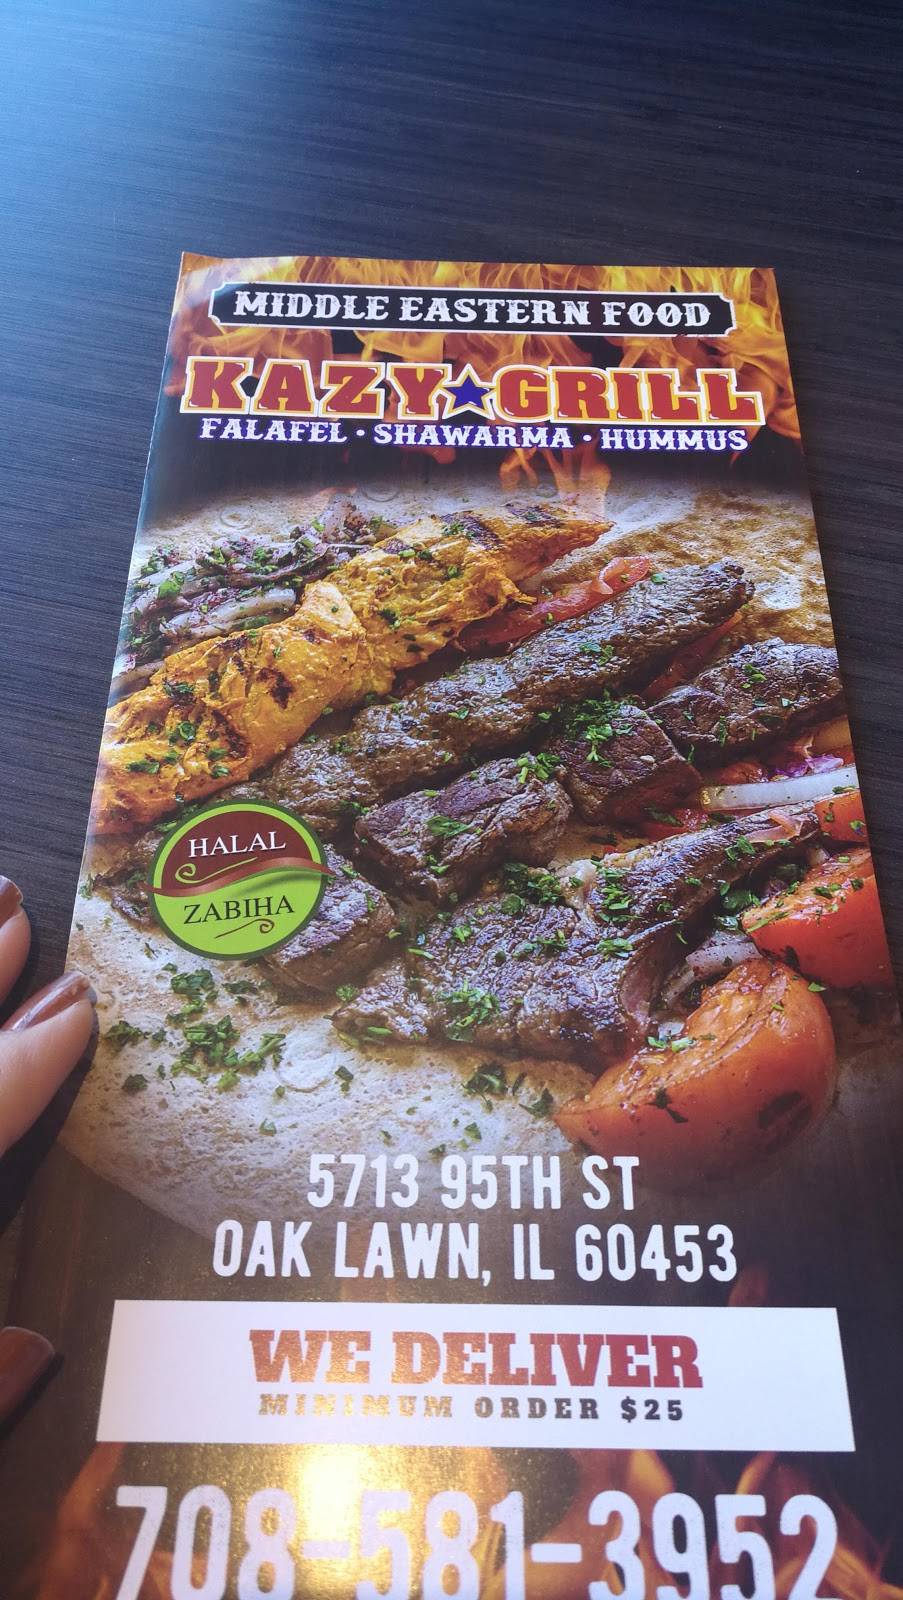 Kazy Grill | restaurant | 5713 95th St, Oak Lawn, IL 60453, USA | 7085813952 OR +1 708-581-3952